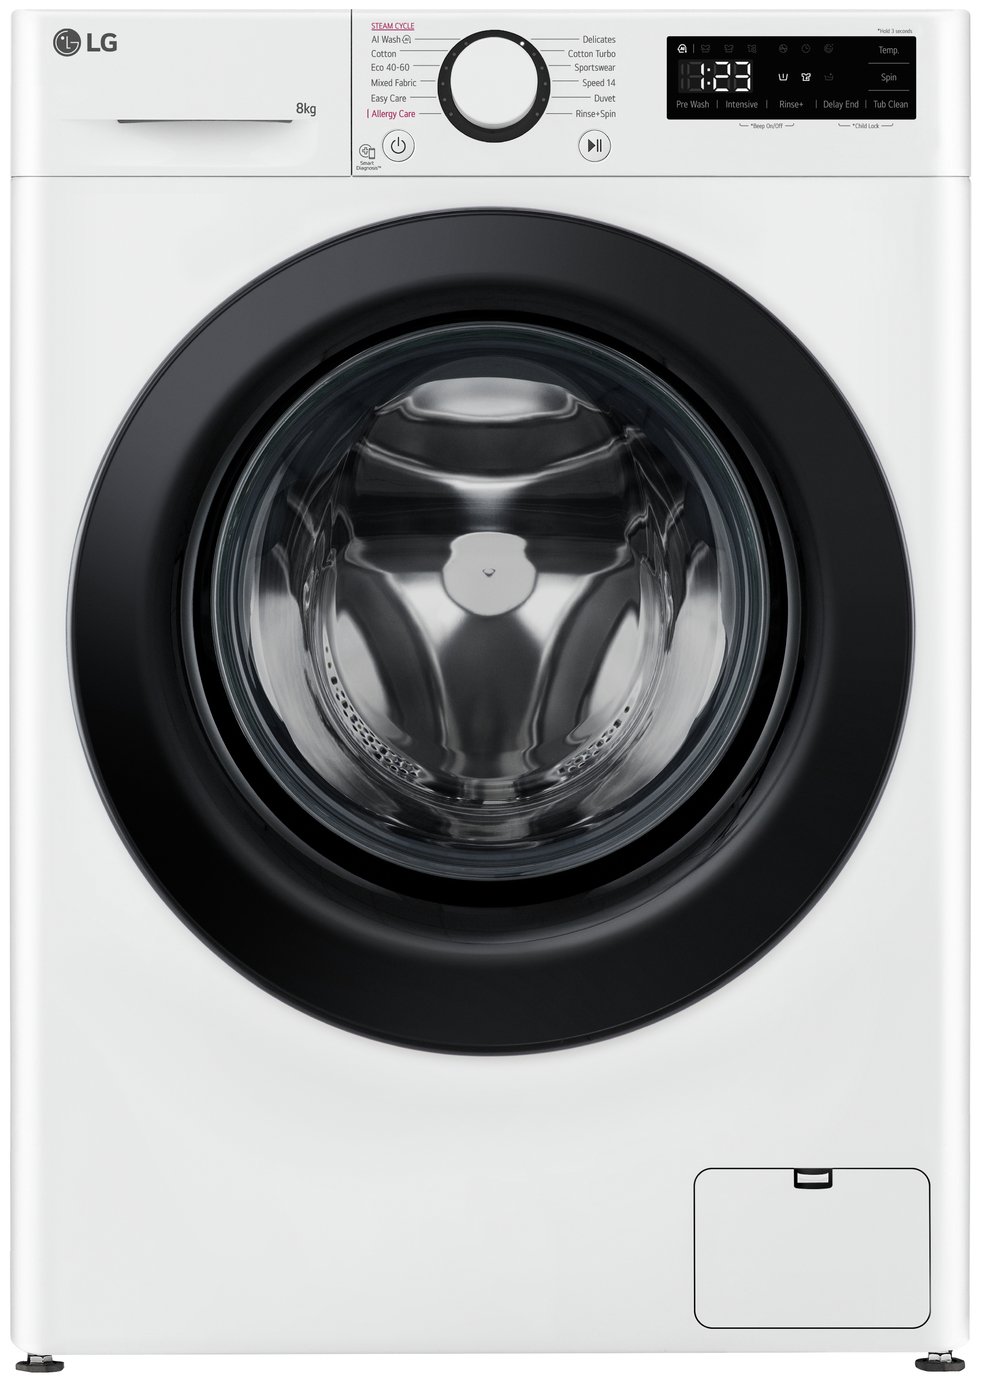 LG F2Y508WBLN1 8KG 1200 Spin Washing Machine - White